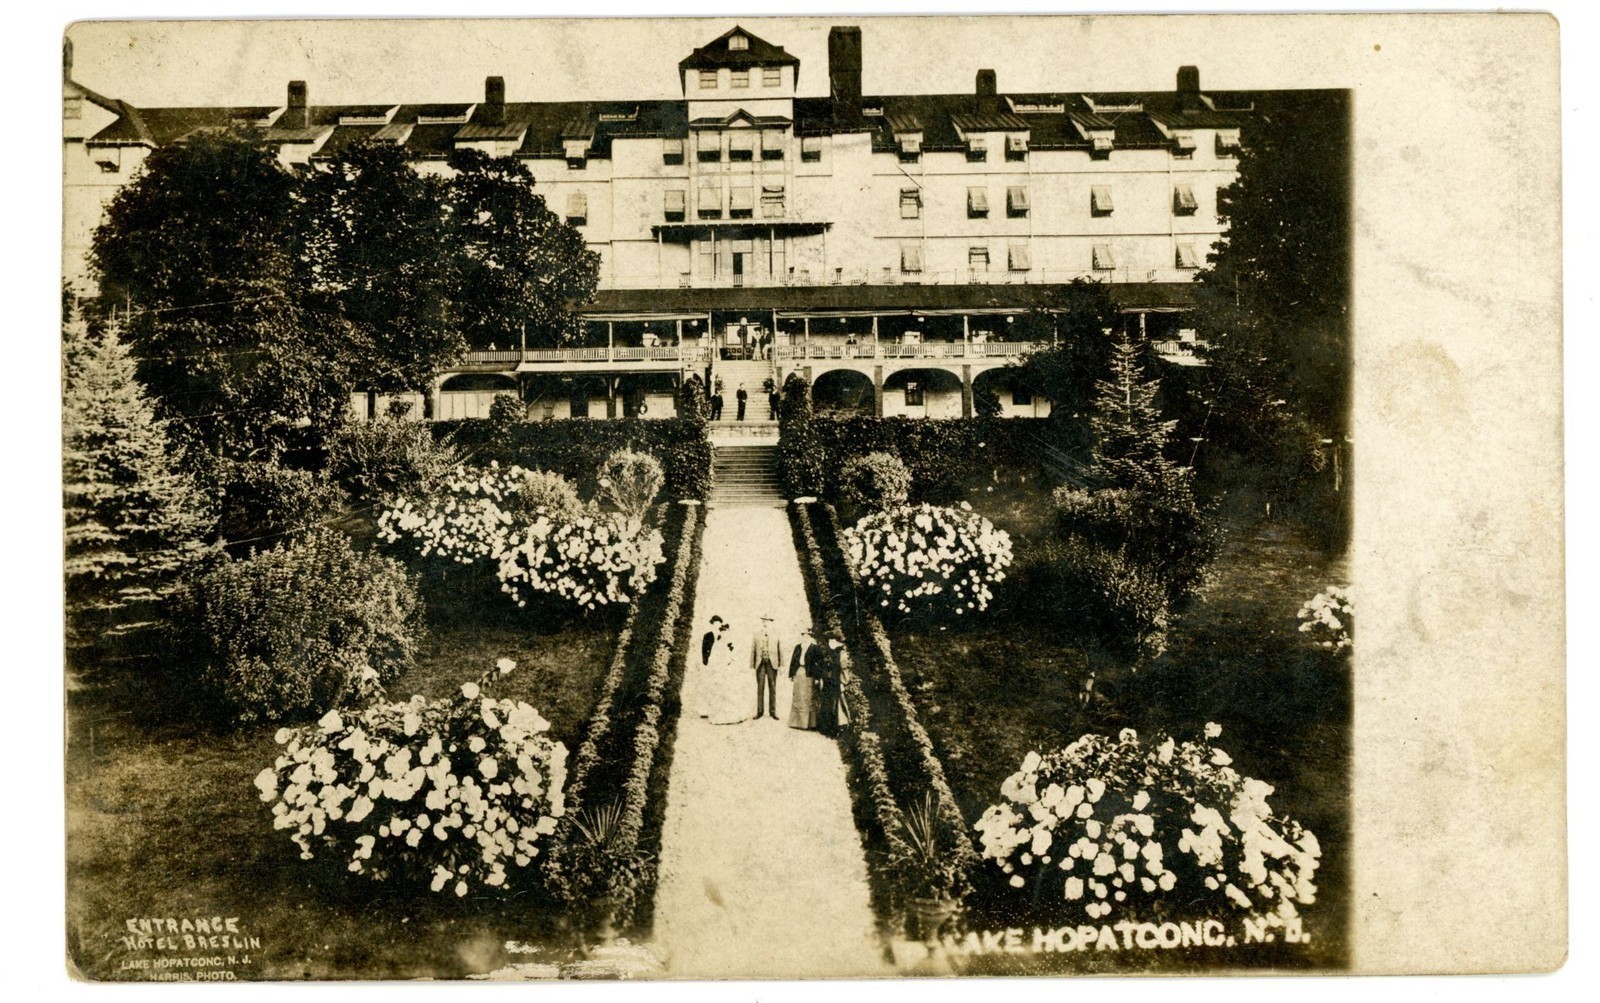 Lake Hopatcong - Entrance to the Hotel Breslin - c 1910